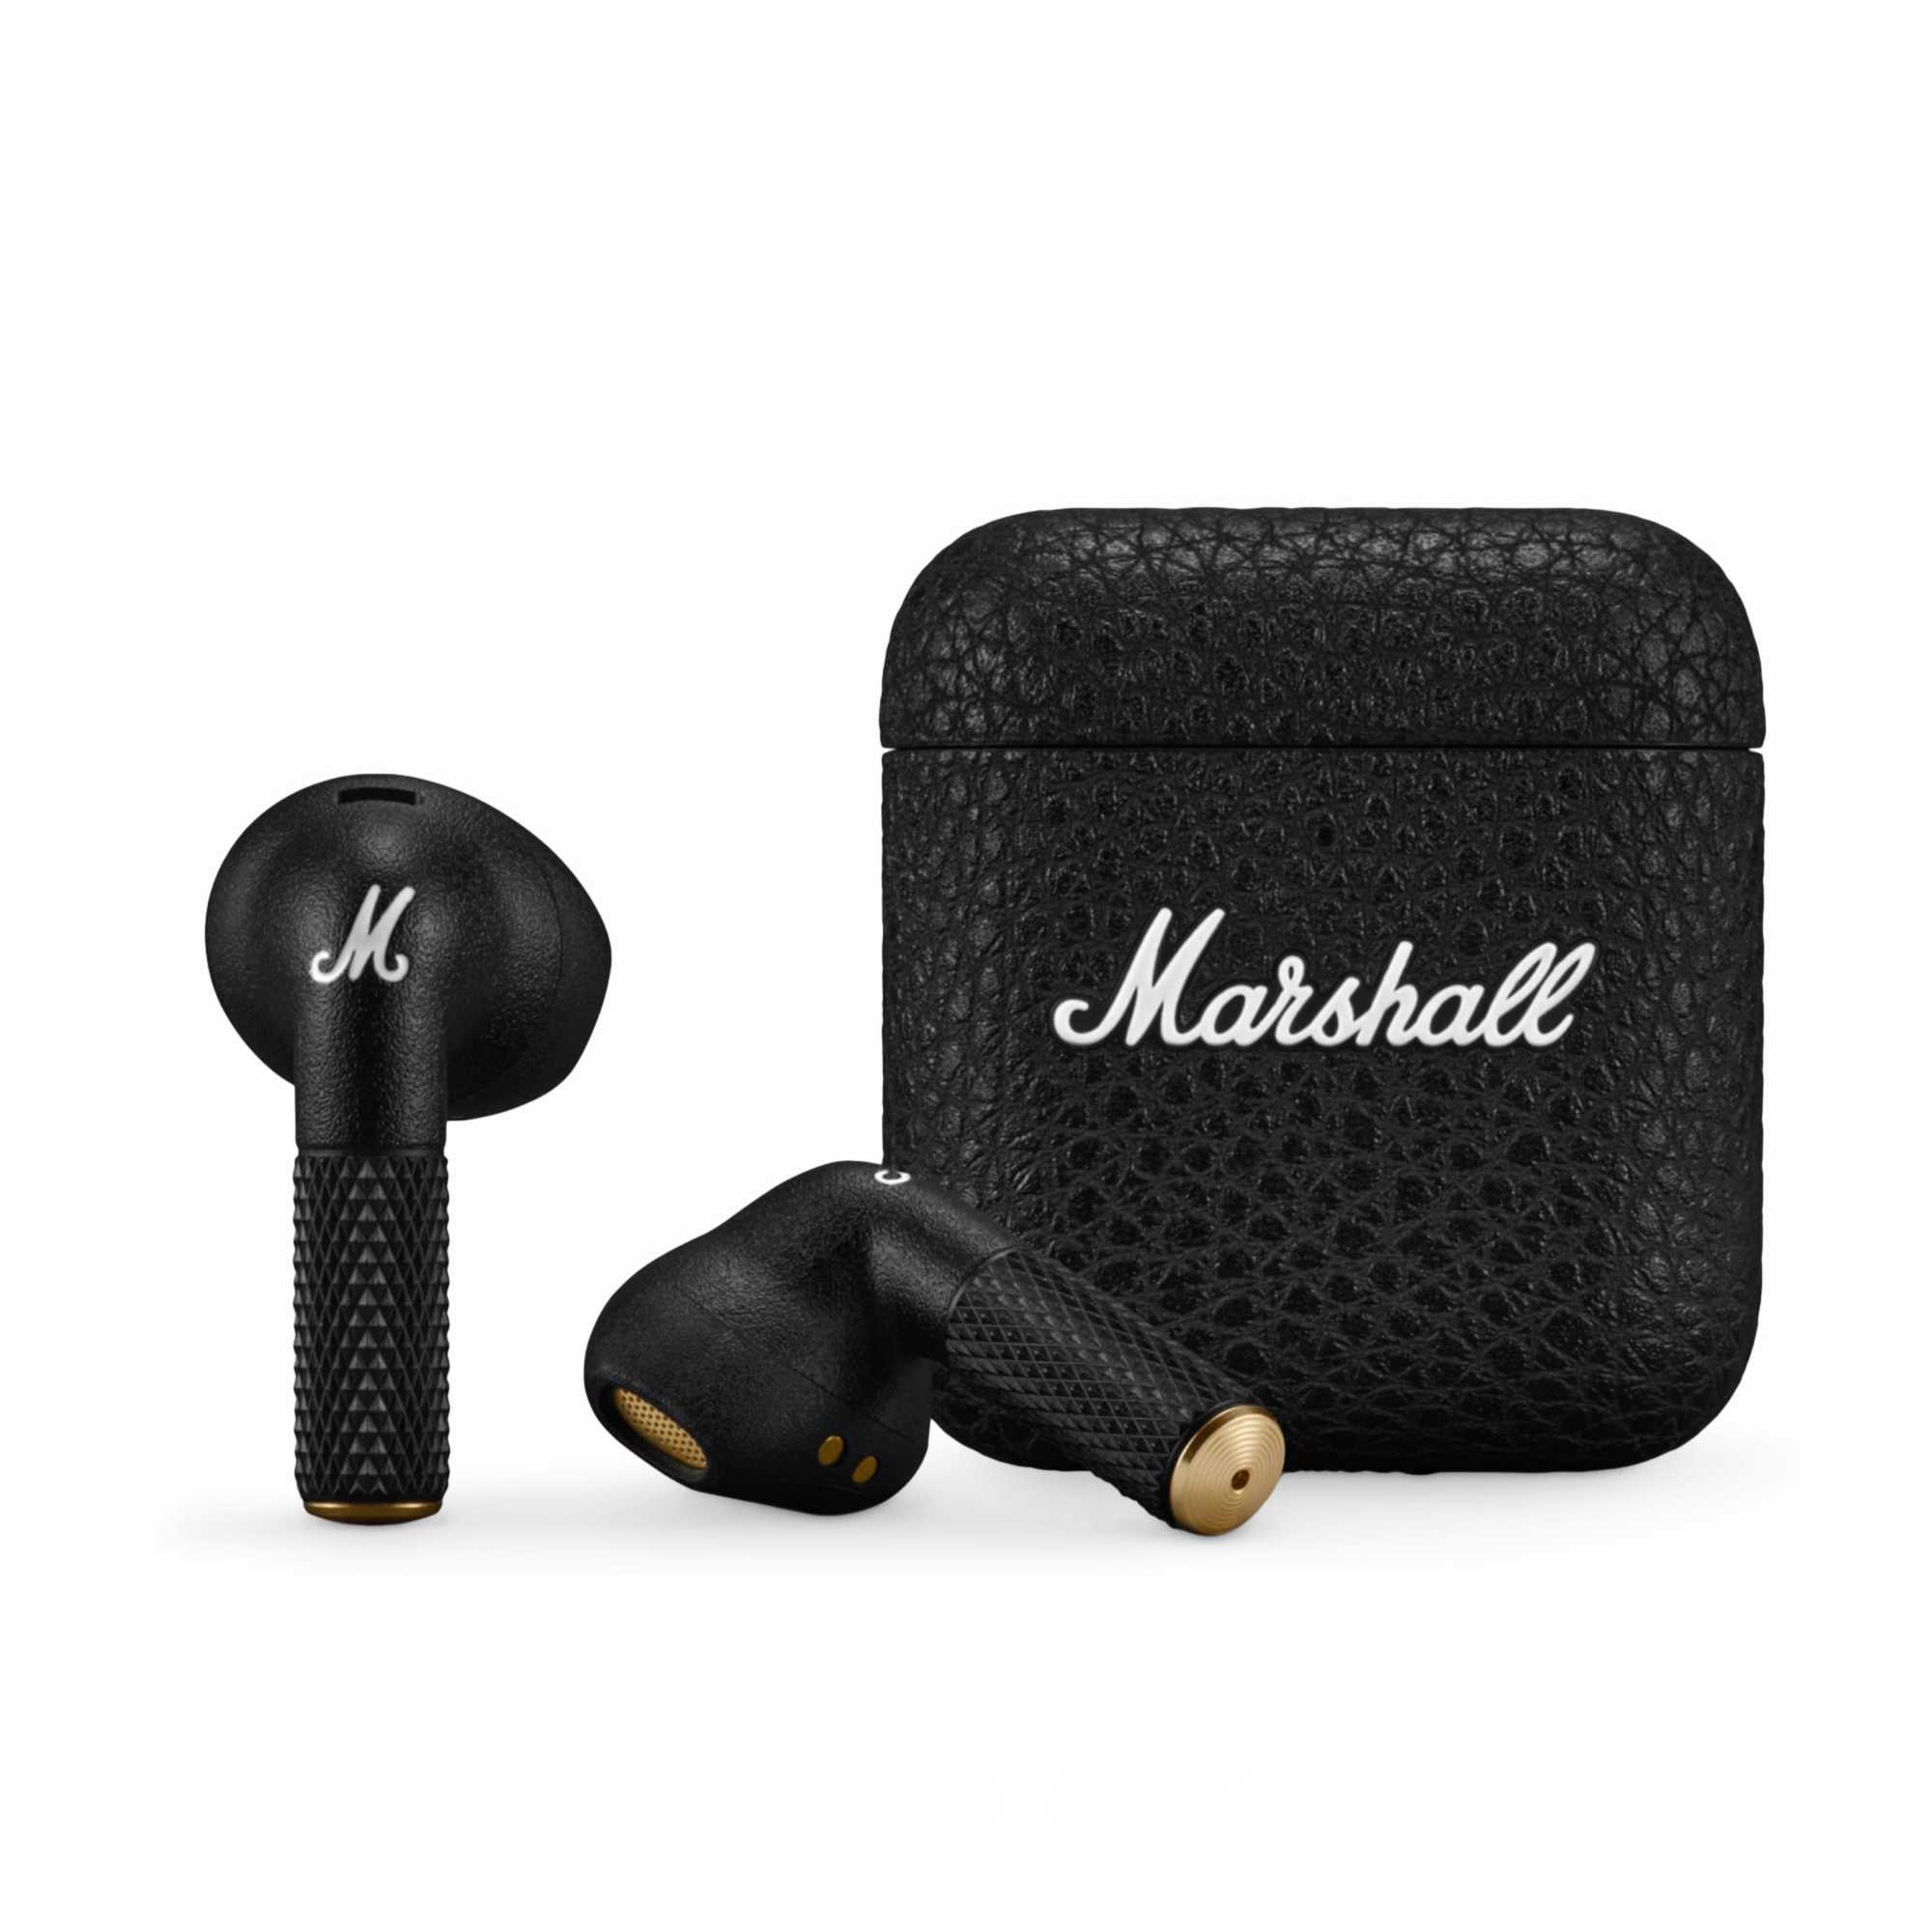 Marshall Minor IV True Wireless Bluetooth In-Ear Headphones with Mic/Remote, Black